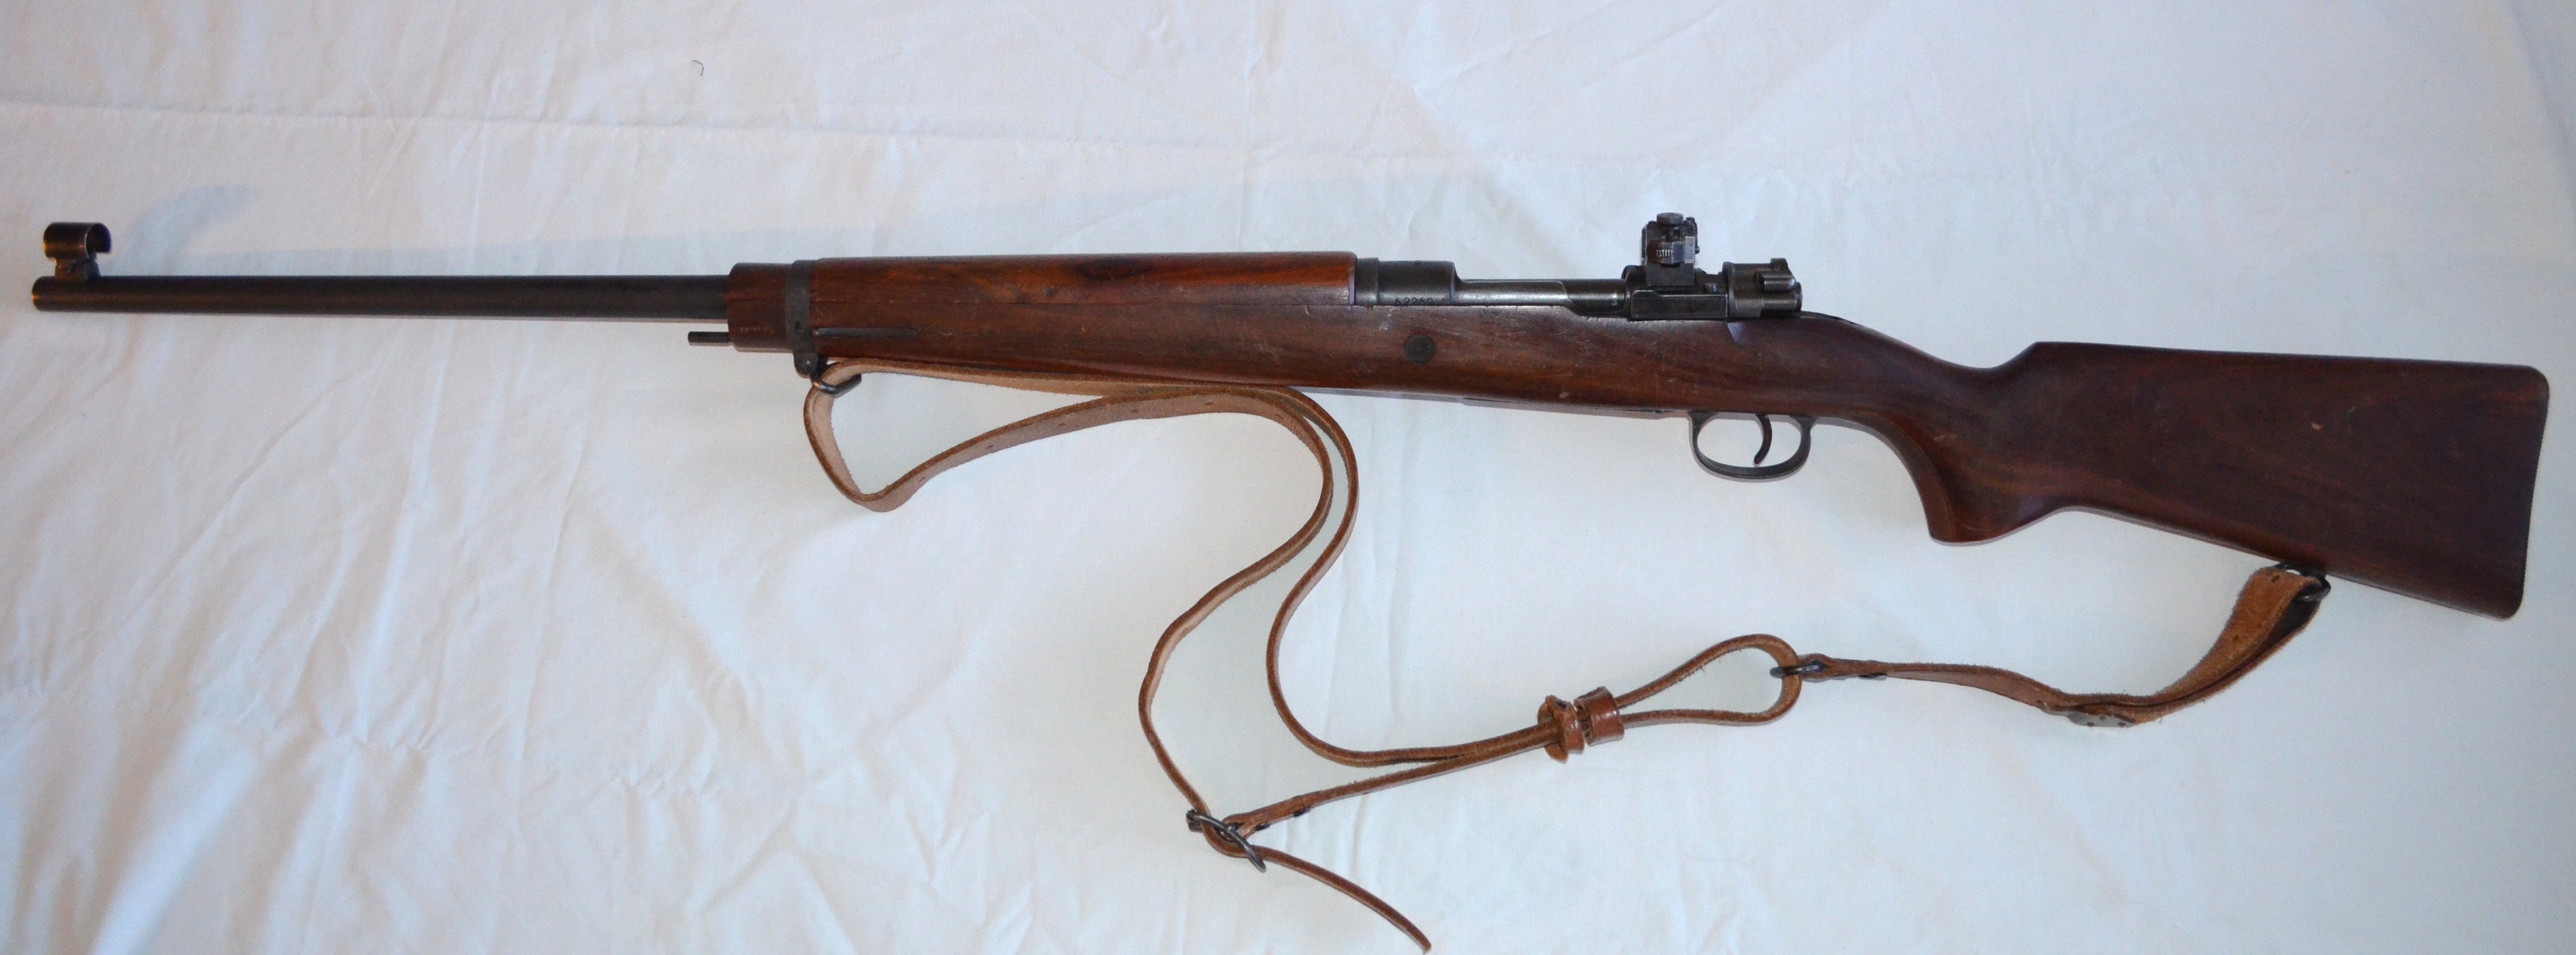 ./guns/rifle/bilder/Rifle-Kongsberg-Mauser-M59F1-62269-2.jpg